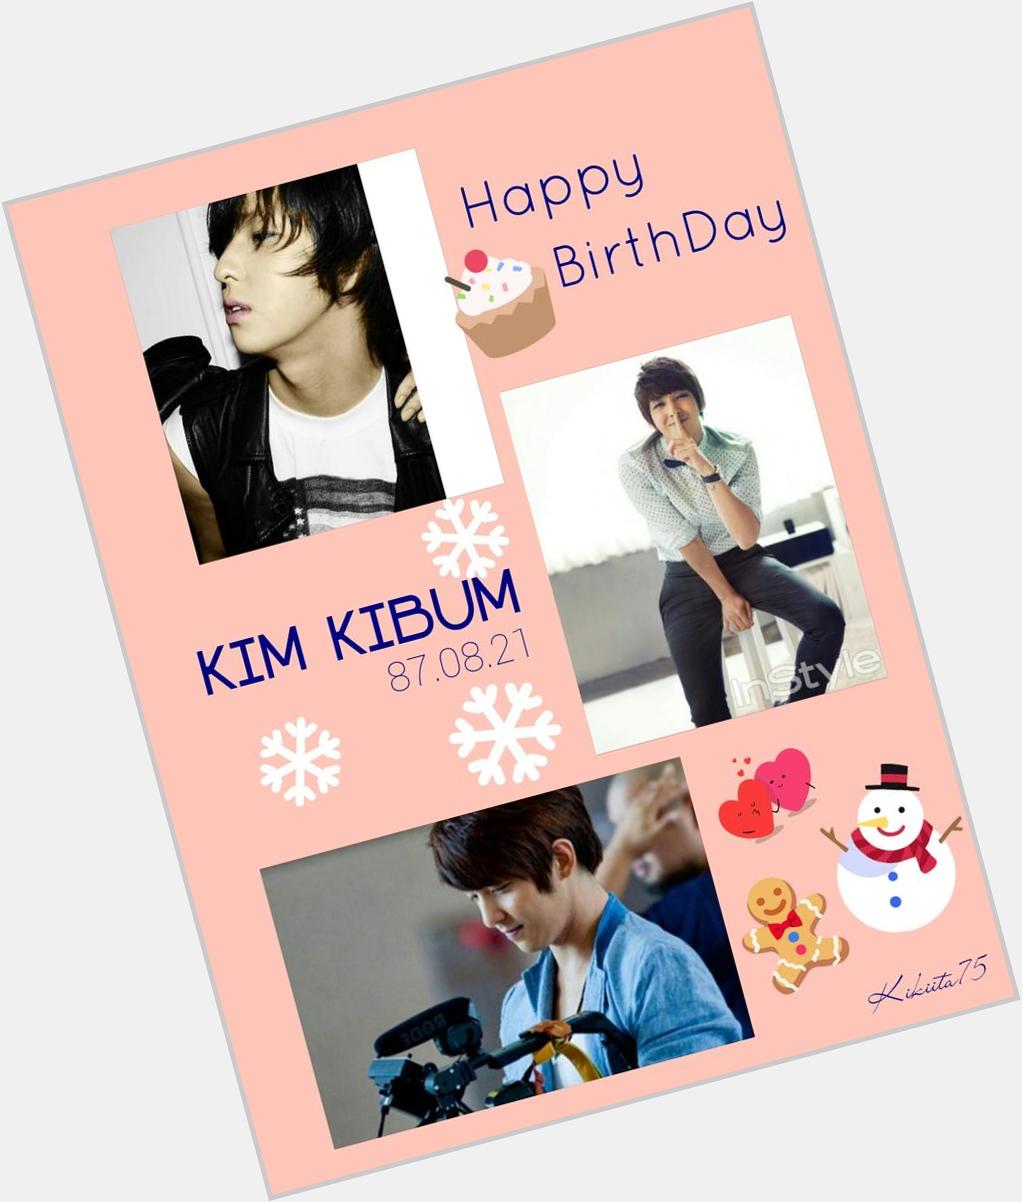 Happy birthday kim kibum     